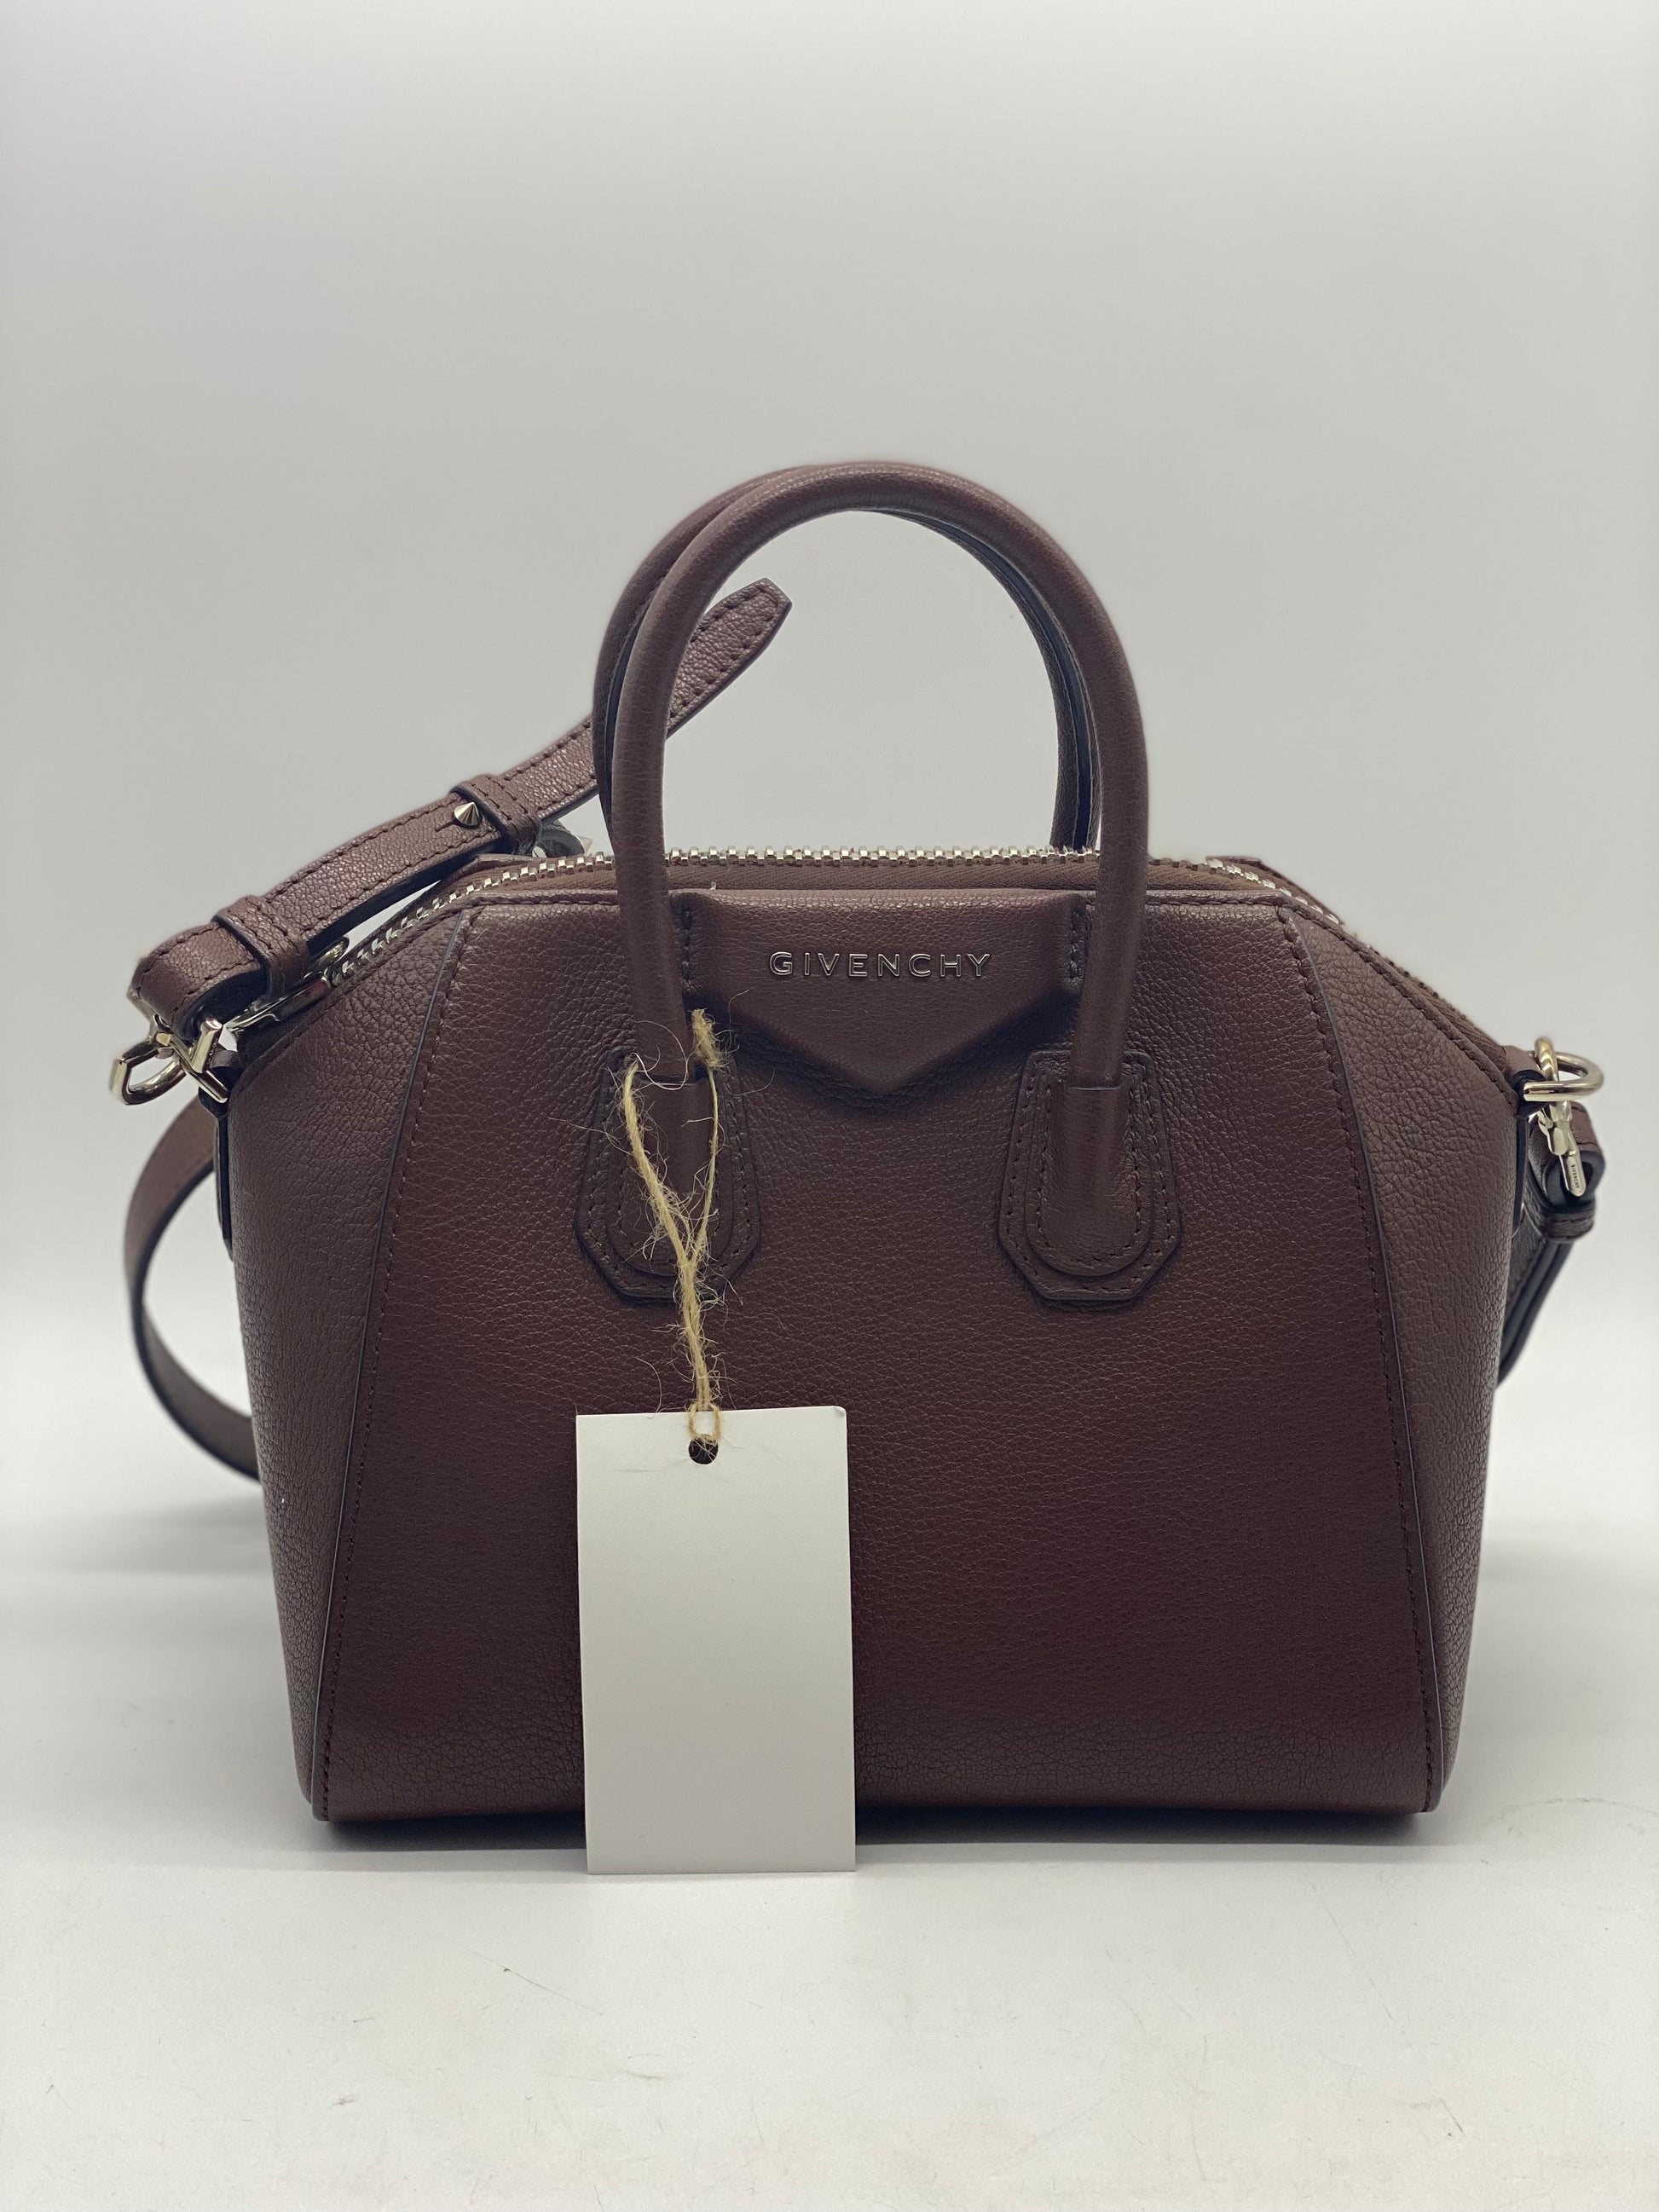 Women's Antigona mini bag, GIVENCHY